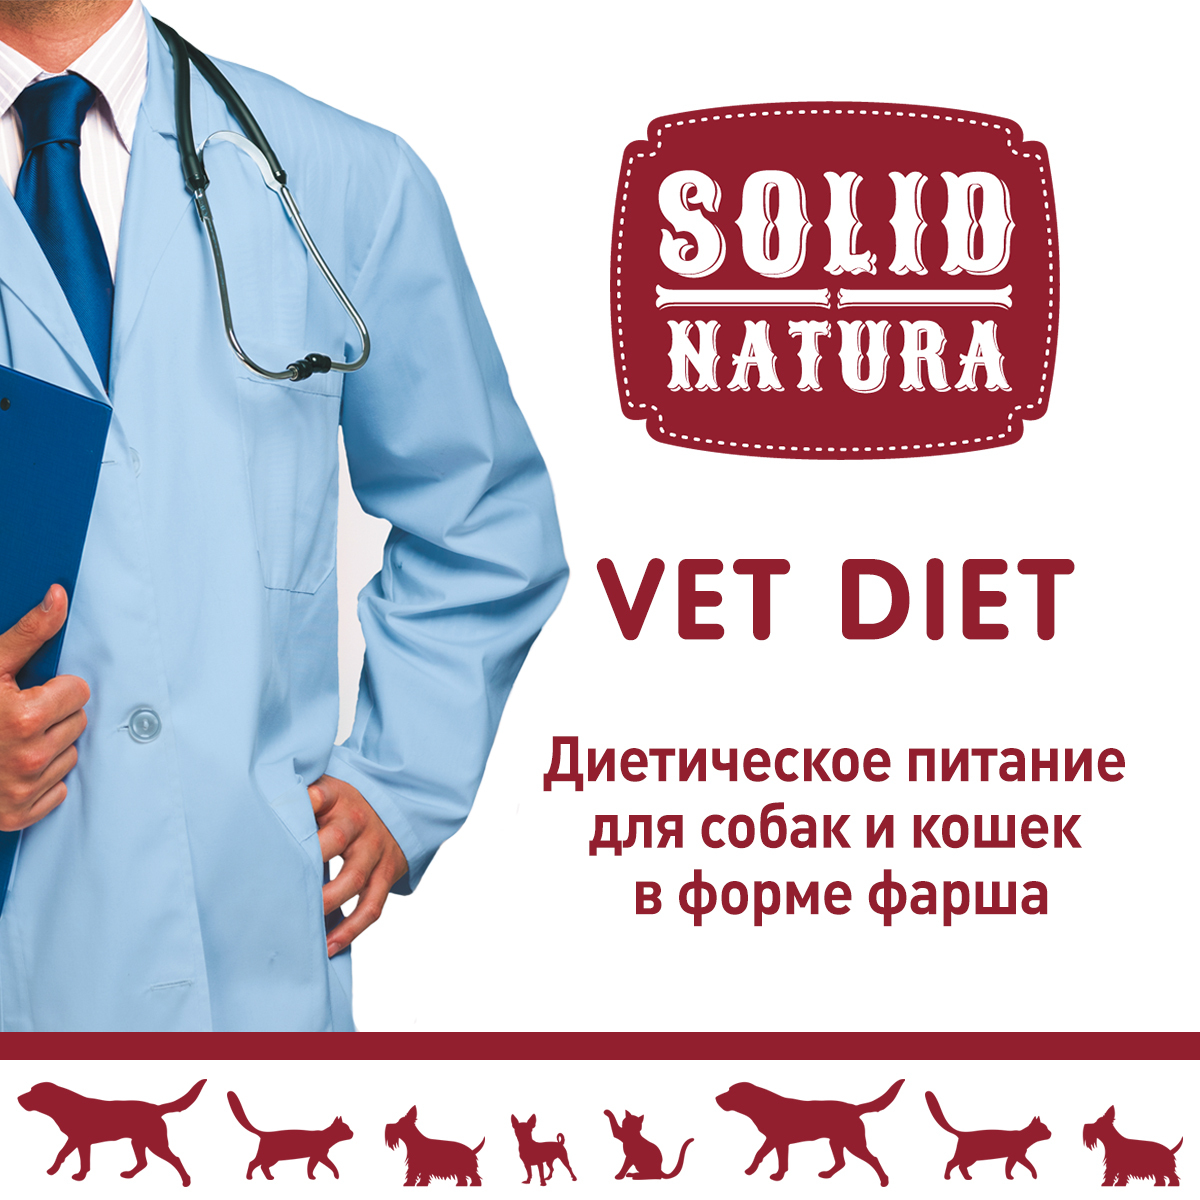 Hepatic Солид натура. Влажный корм Solid Natura vet Recovery support диета для кошек и собак. Solid Natura vet renal. Солид натура рекавери. Solid natura vet